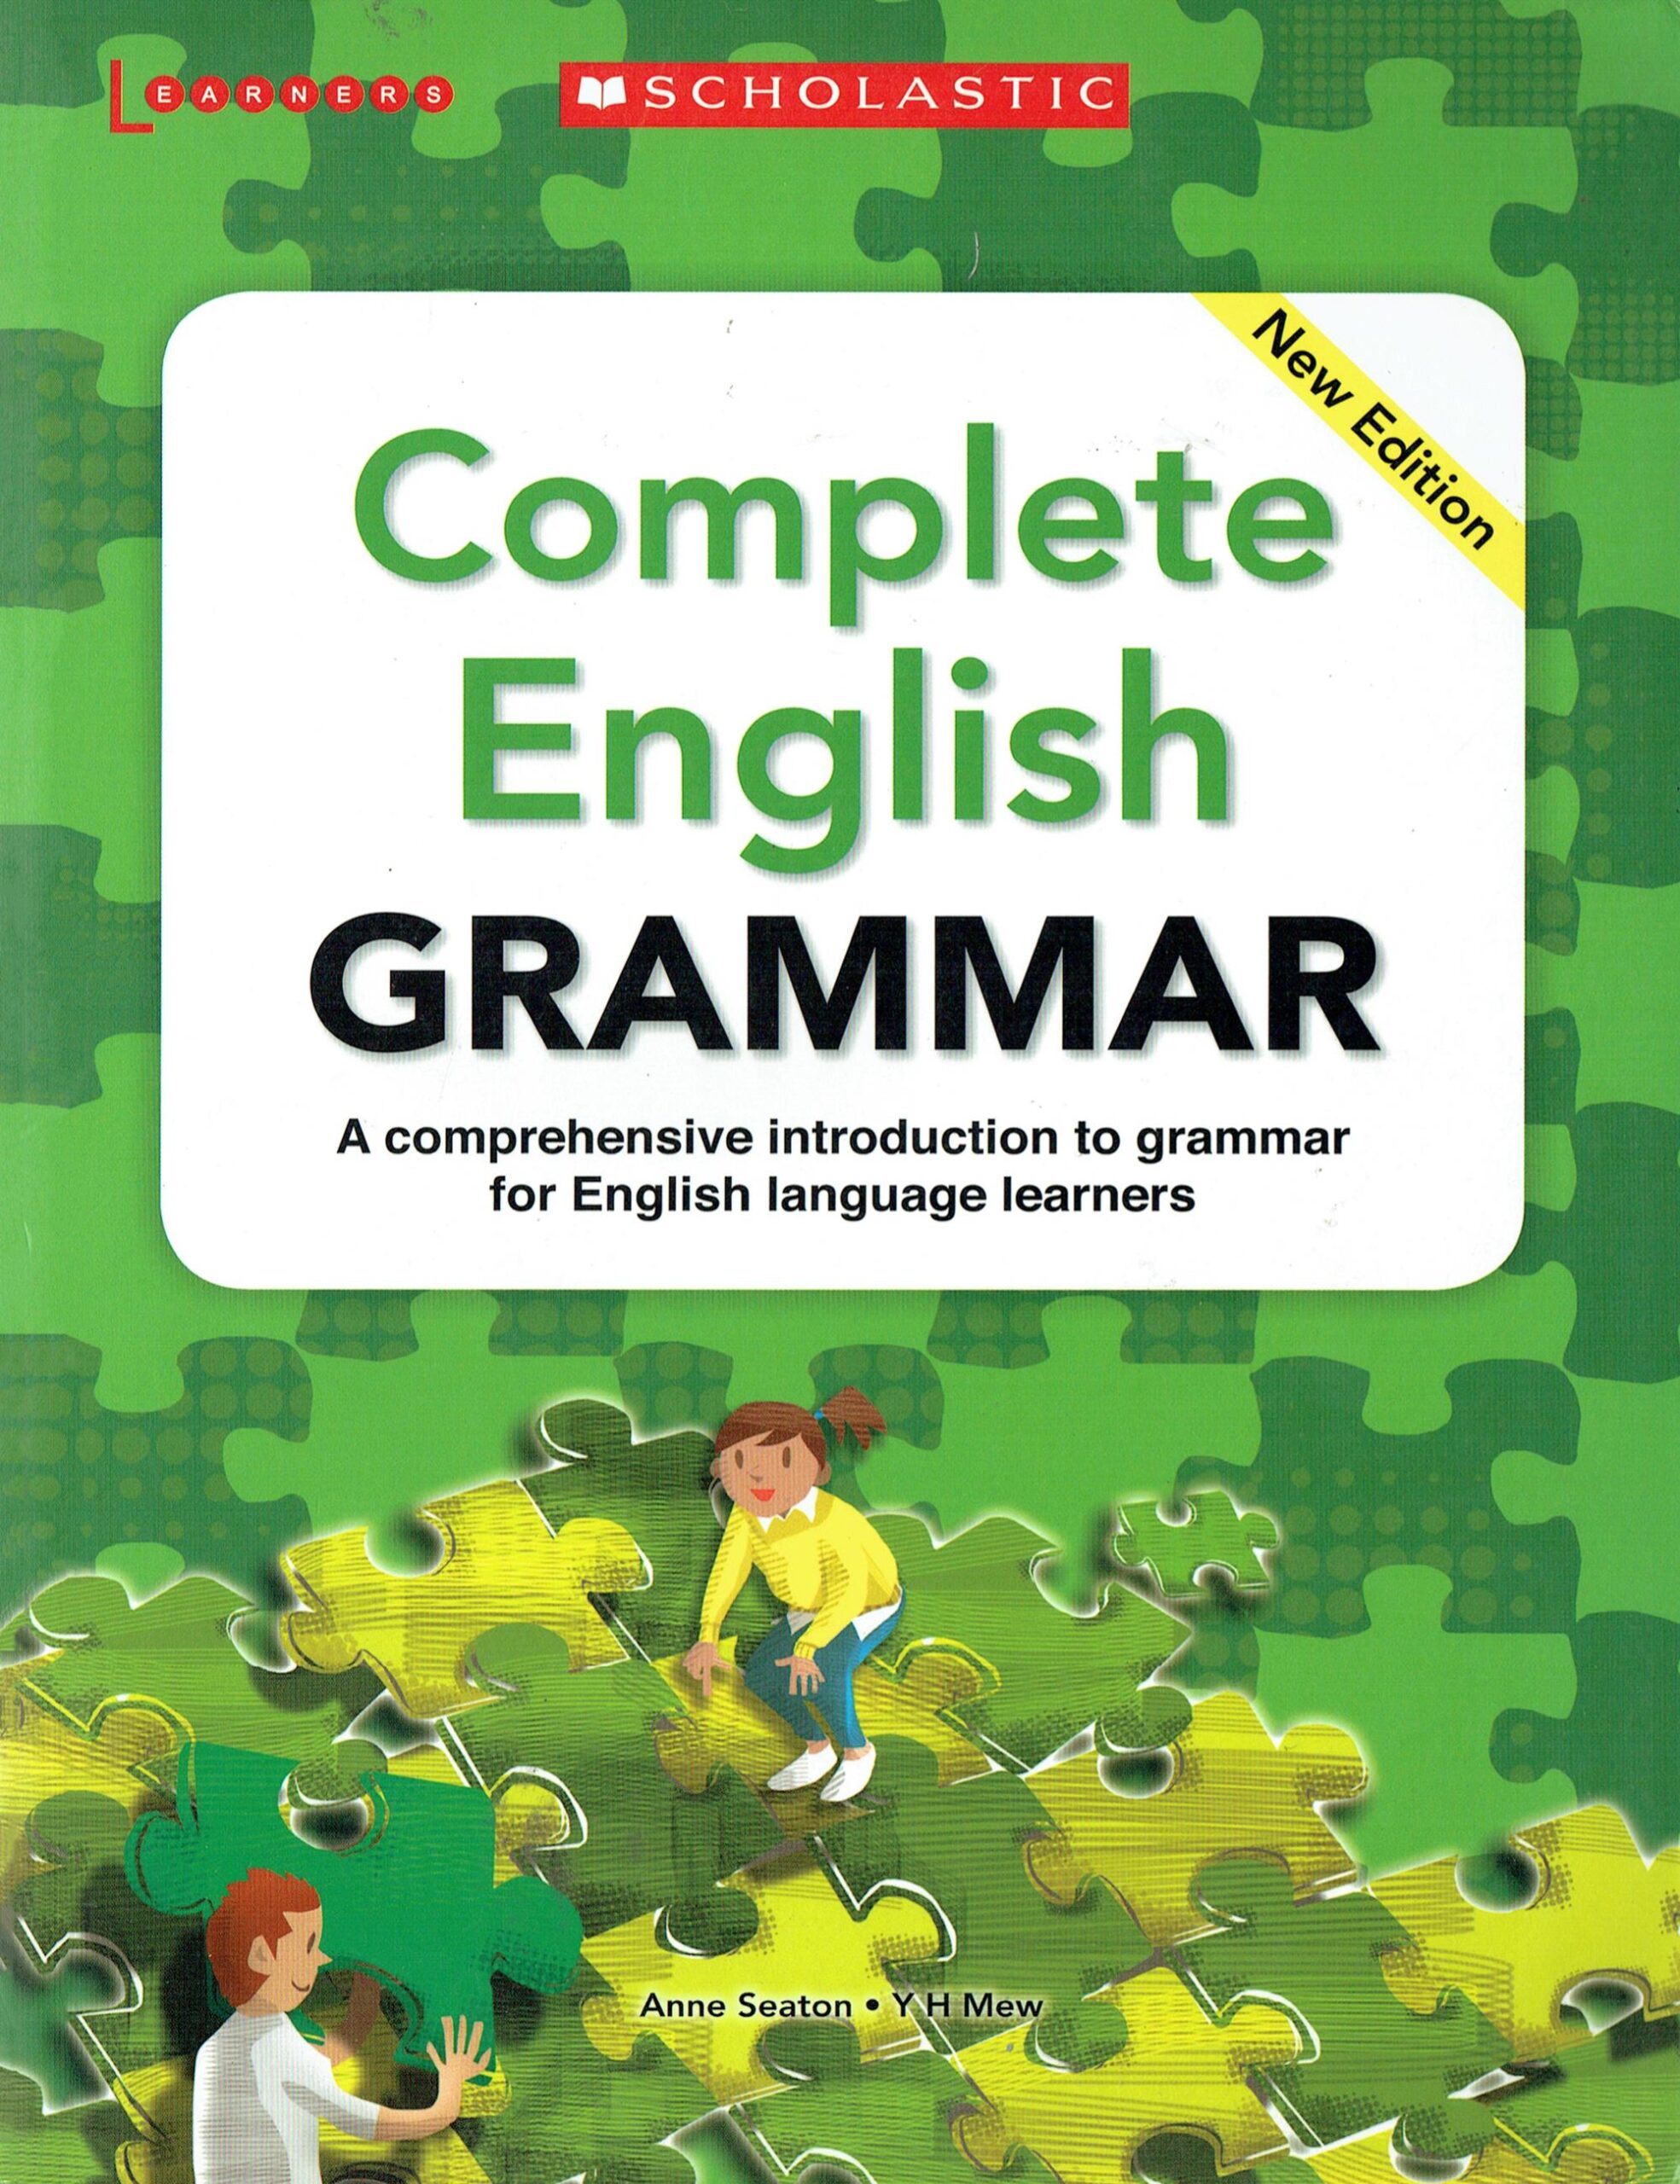 Complete english. English complete. A comprehensive Grammar of the English language книга. English Grammar Пчелкина. English Grammar зеленая обложка.